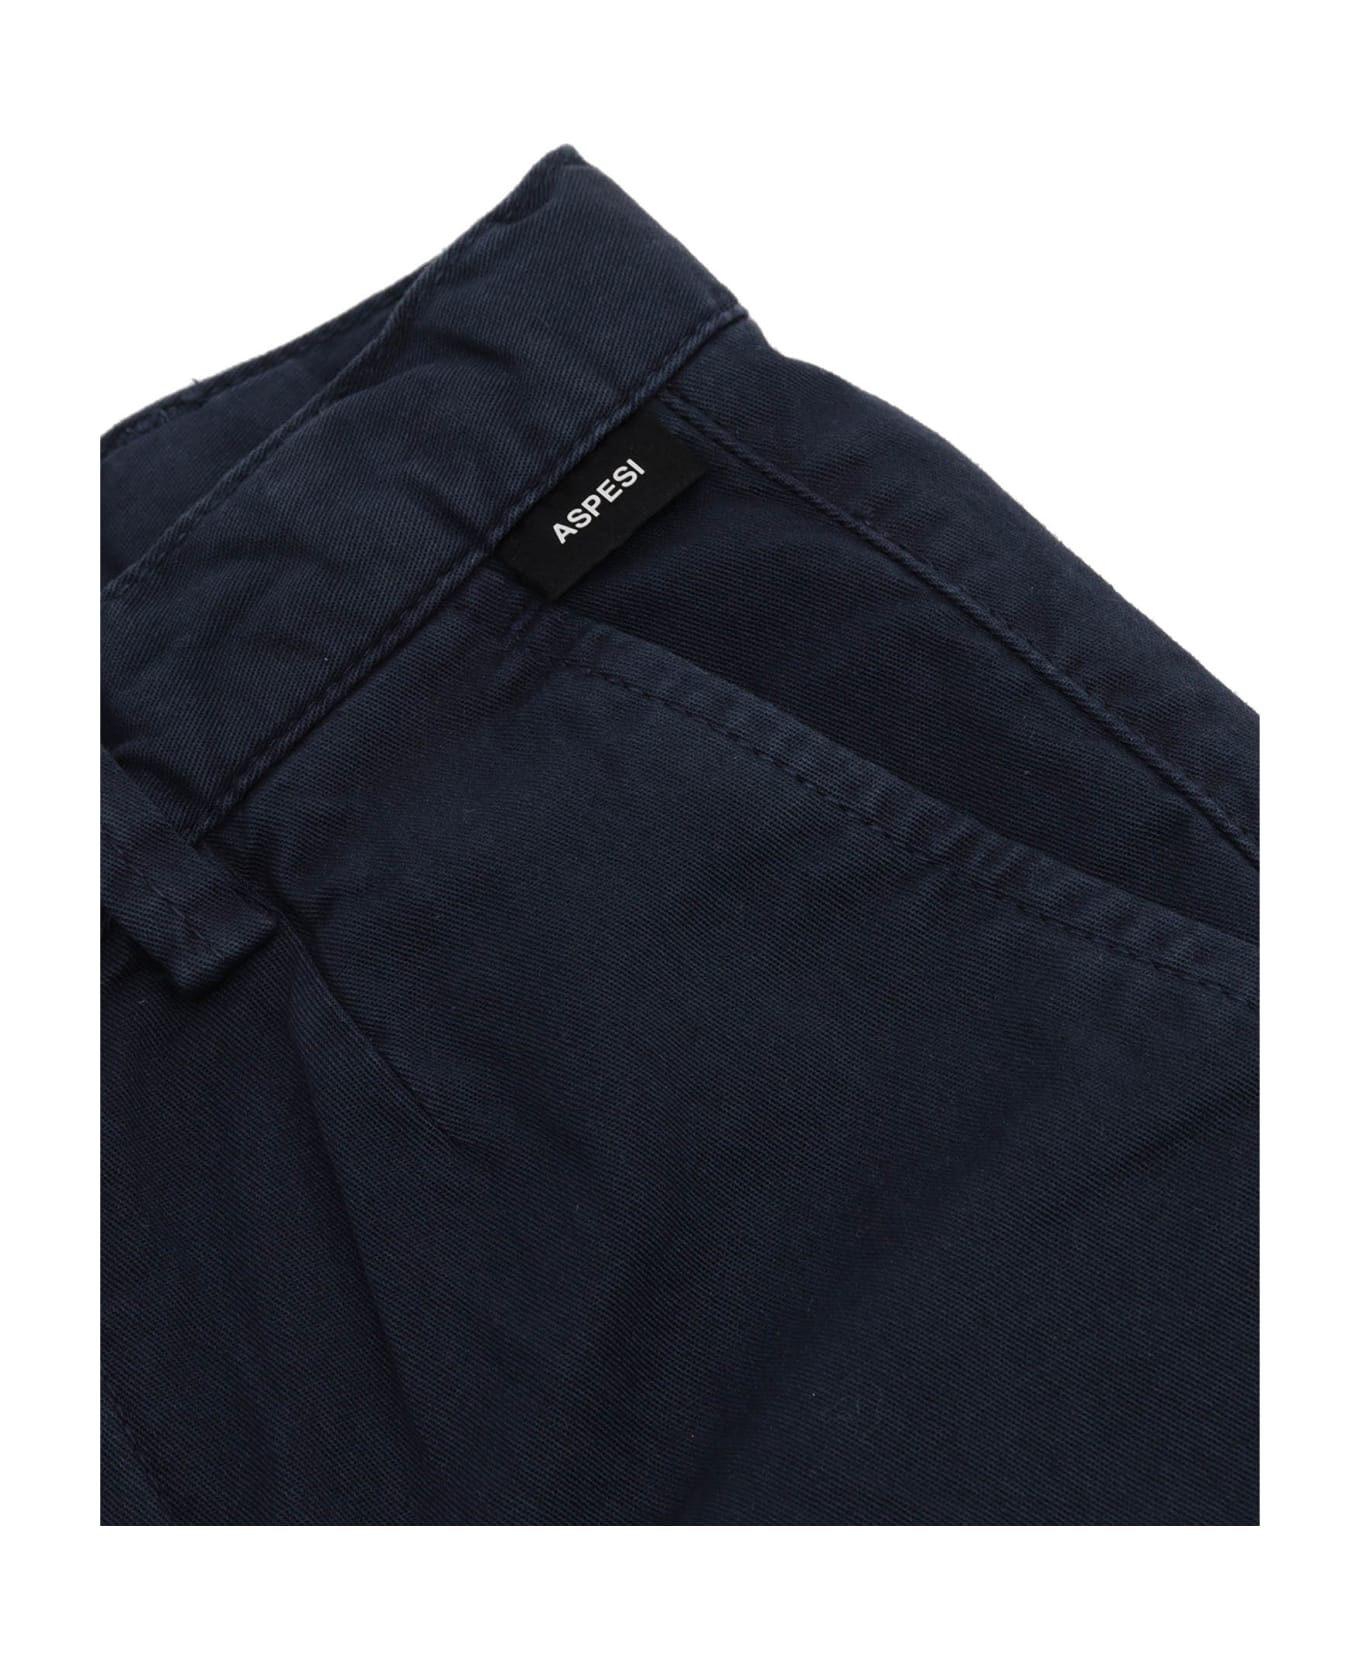 Aspesi Black Trousers - BLUE